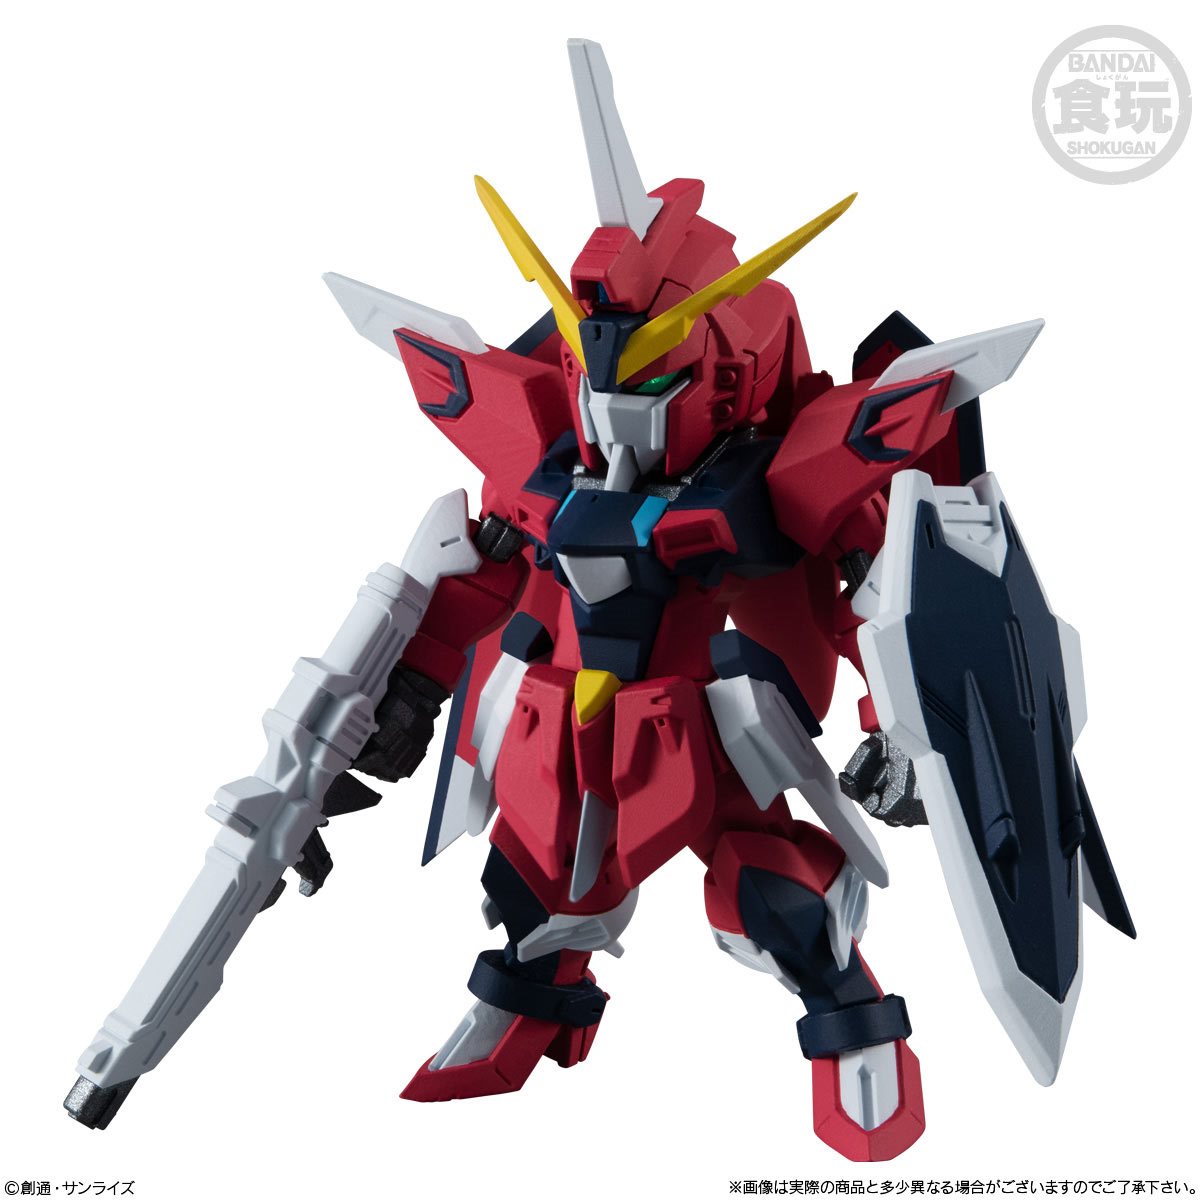 Bandai Shokugan Mini Figure: Mobile Suit Gundam FW - Numero 24 Set Completo